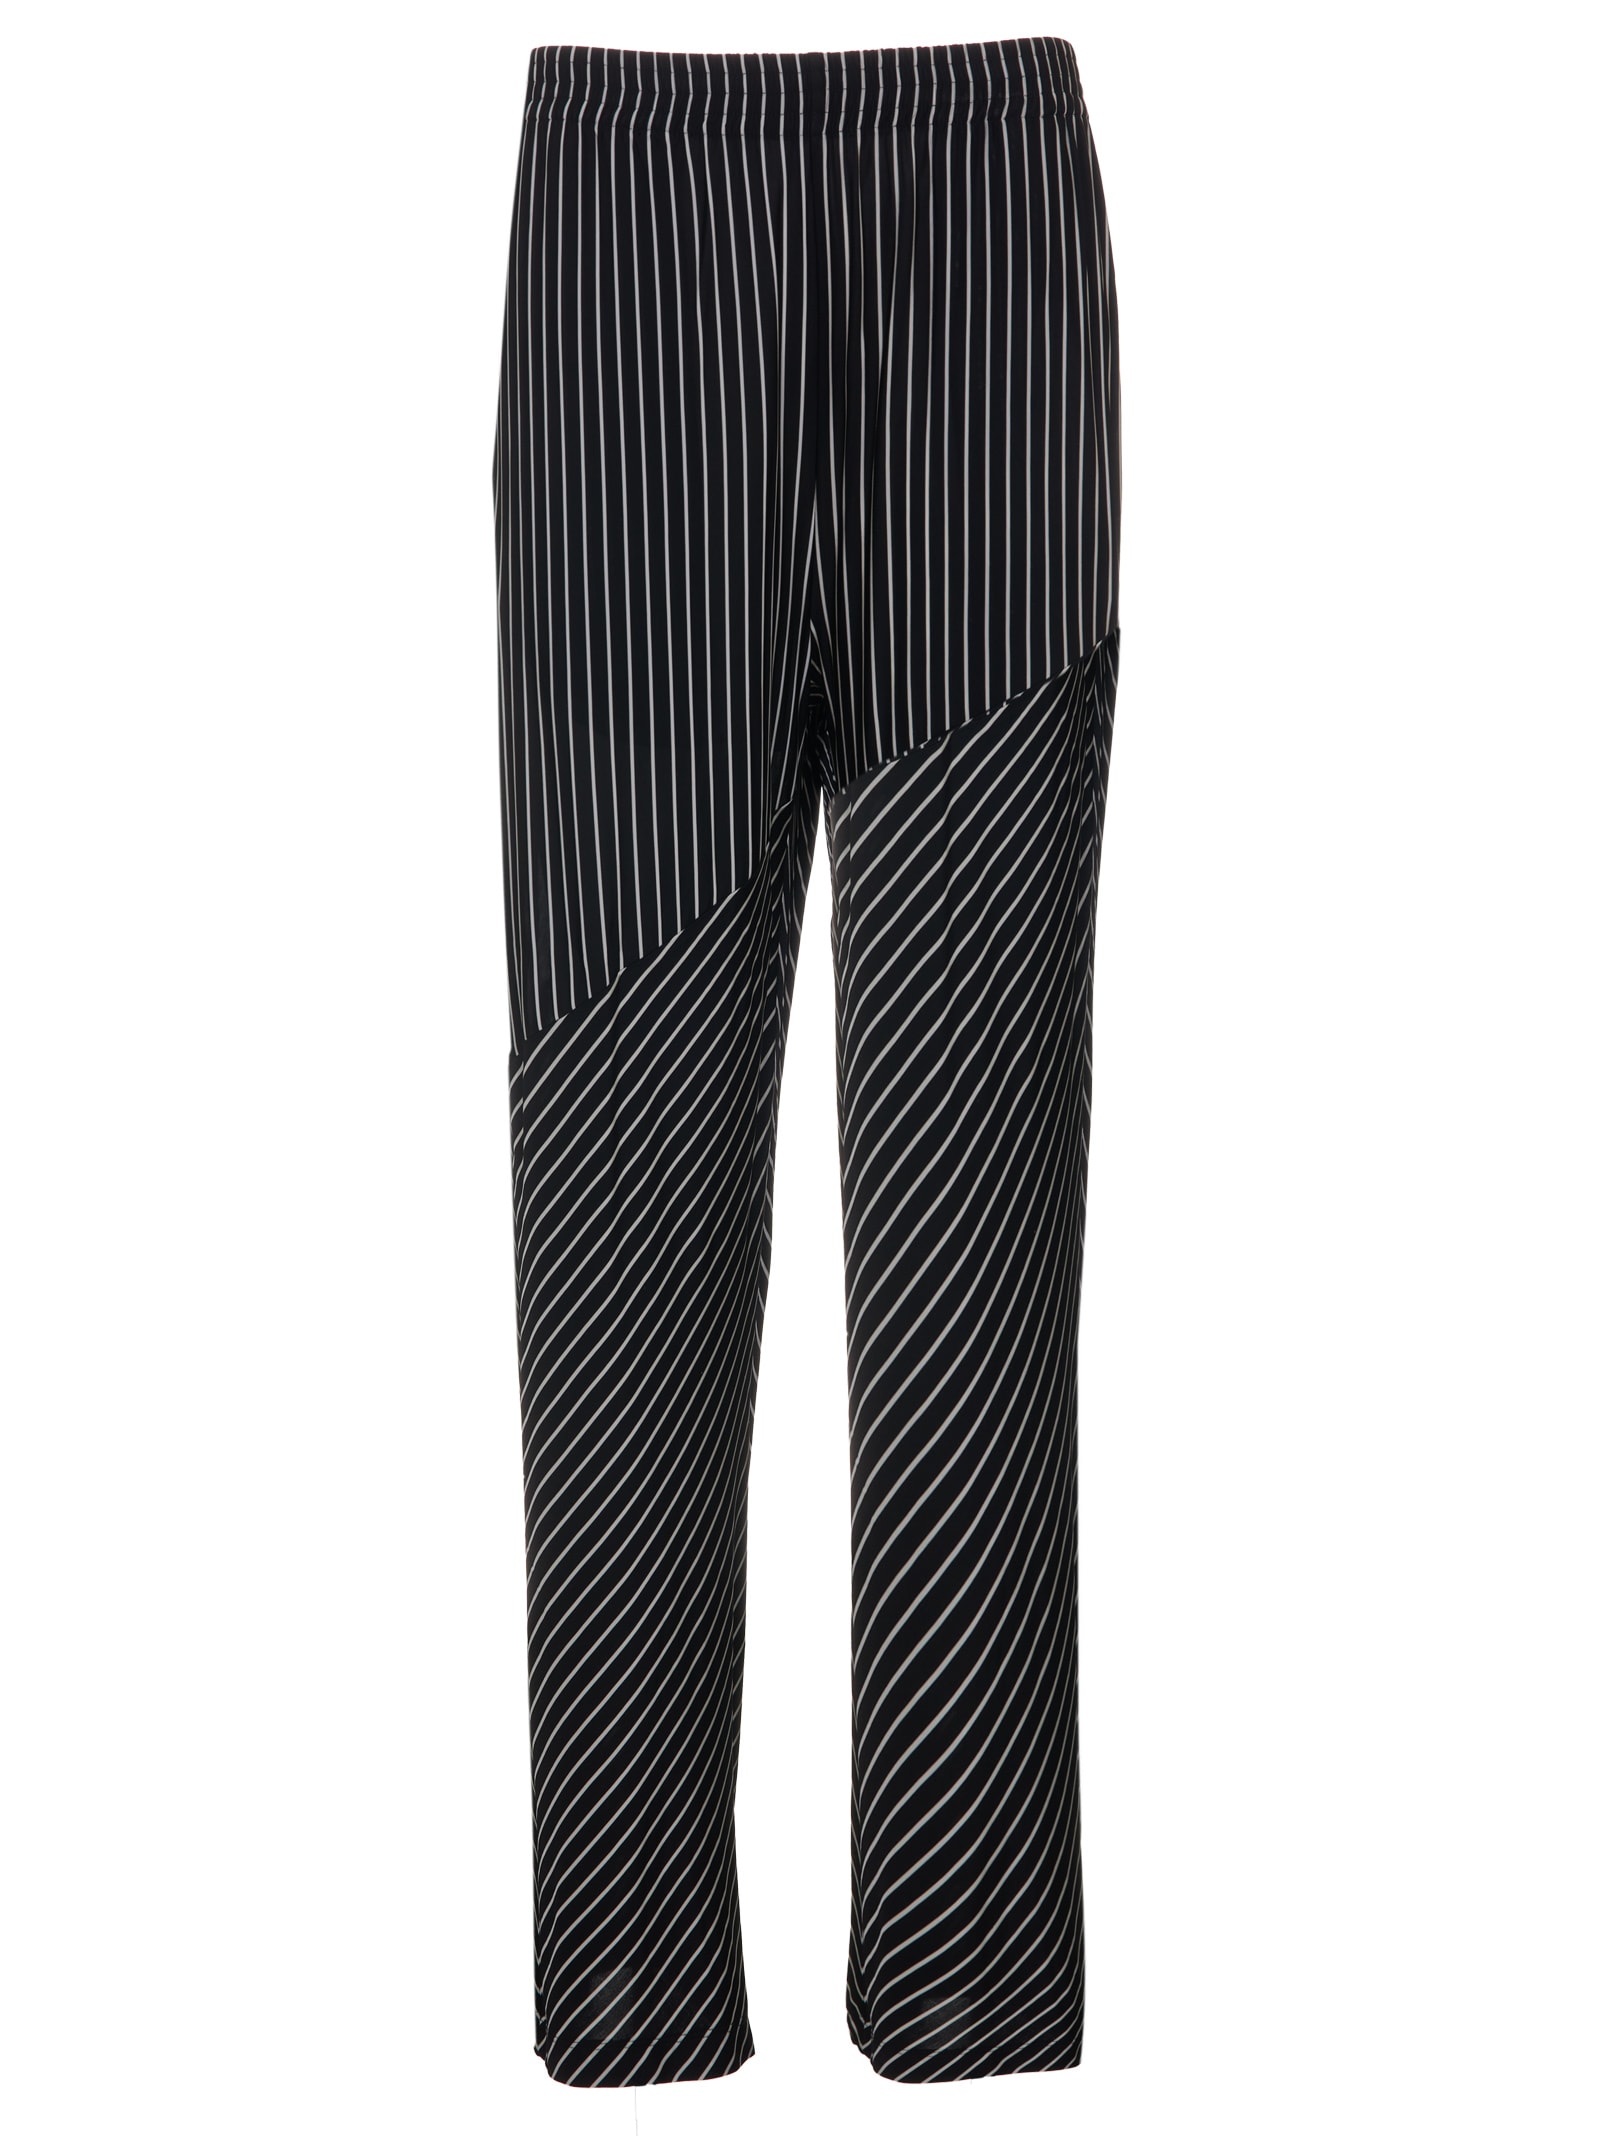 MM6 Maison Margiela Striped Pants